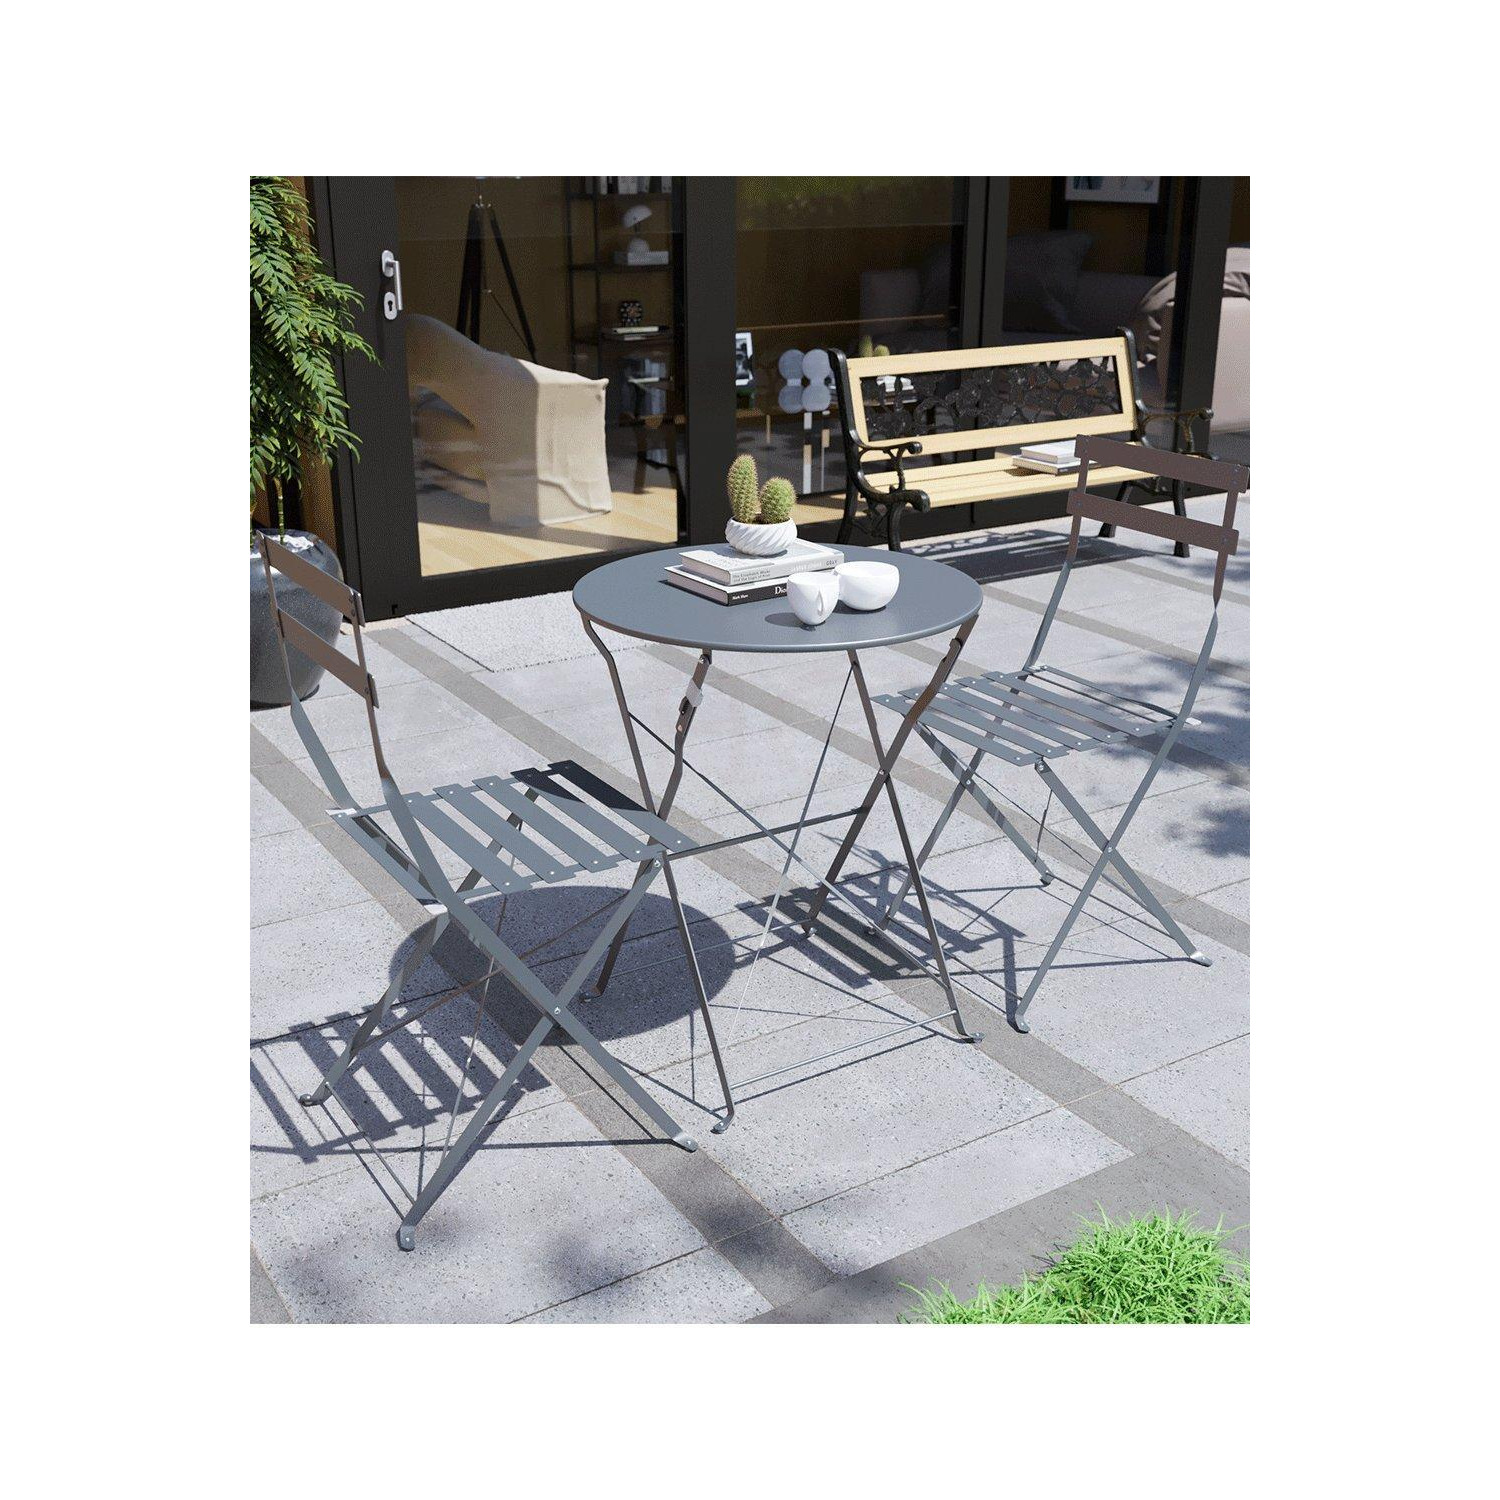 Garden Vida Porto 2 Seater Metal Bistro Set Garden Furniture - 2 Chairs and Table - image 1